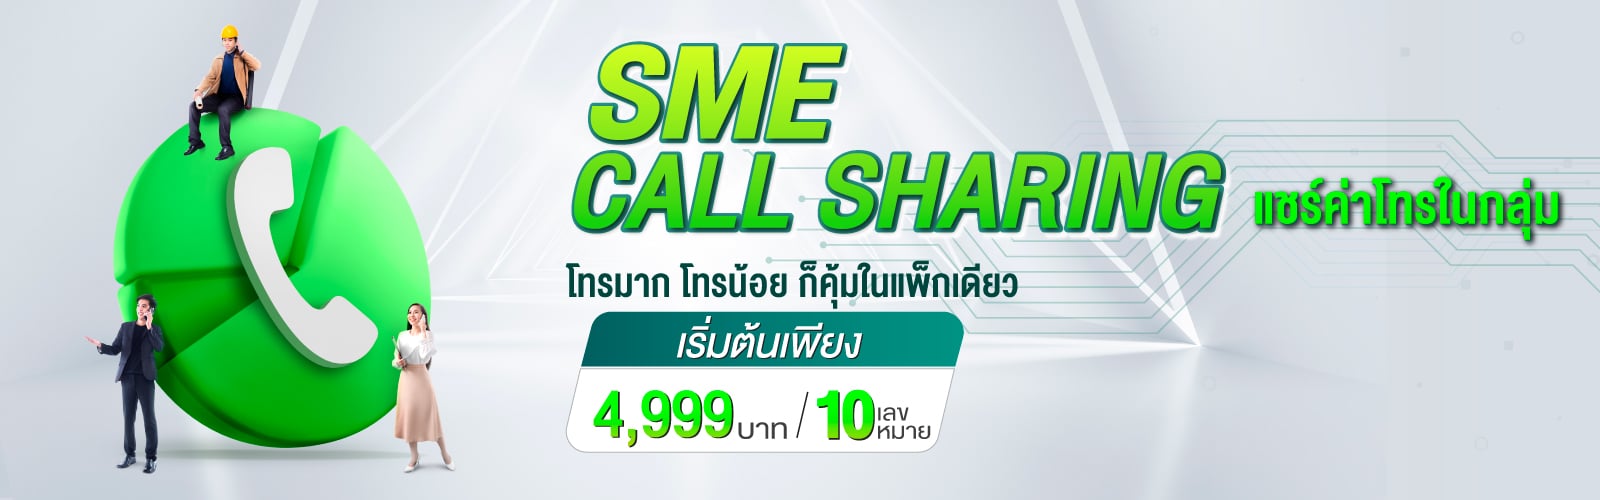 SME Call Sharing